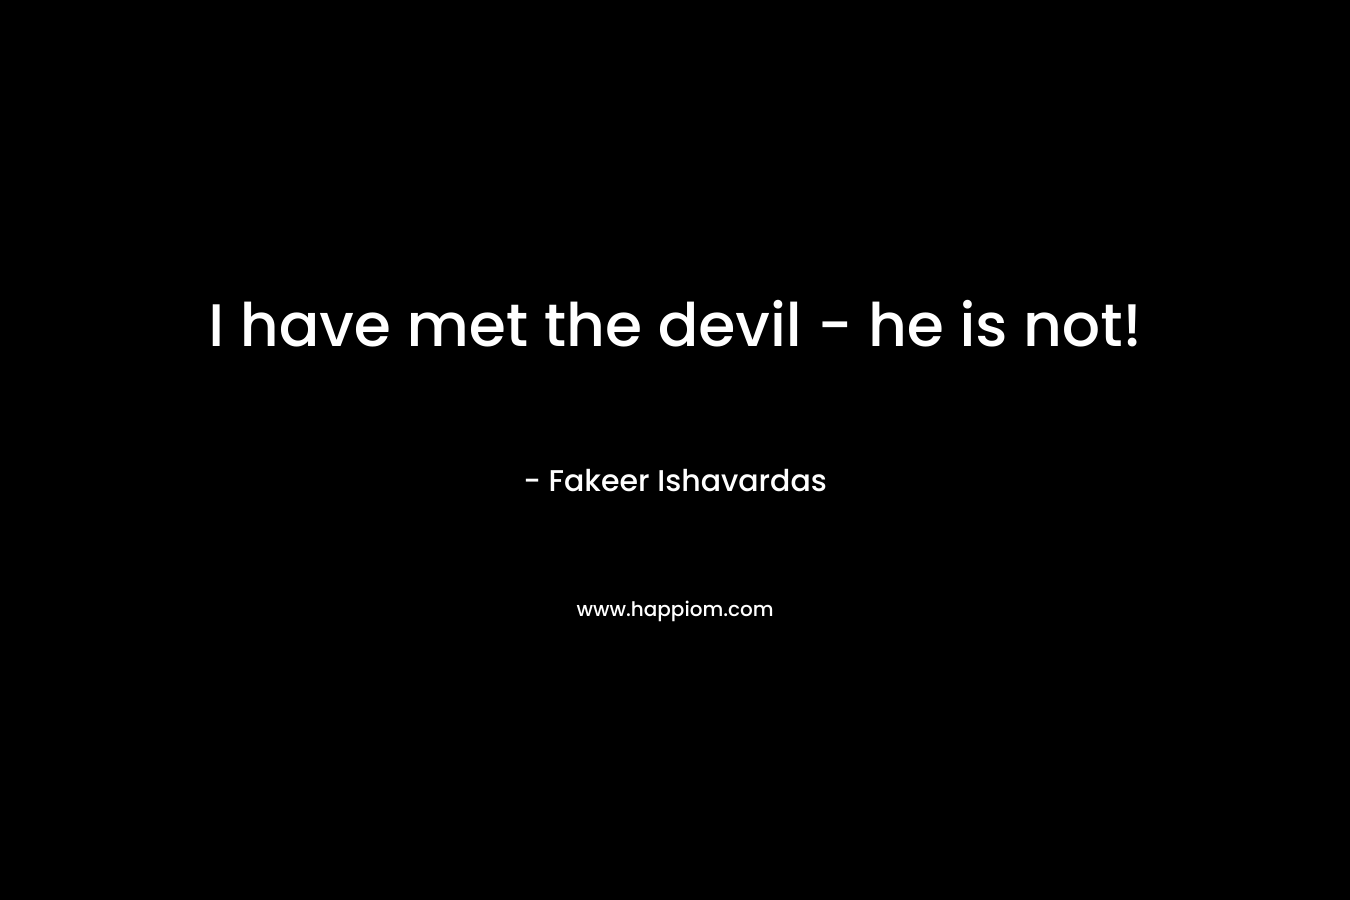 I have met the devil - he is not!